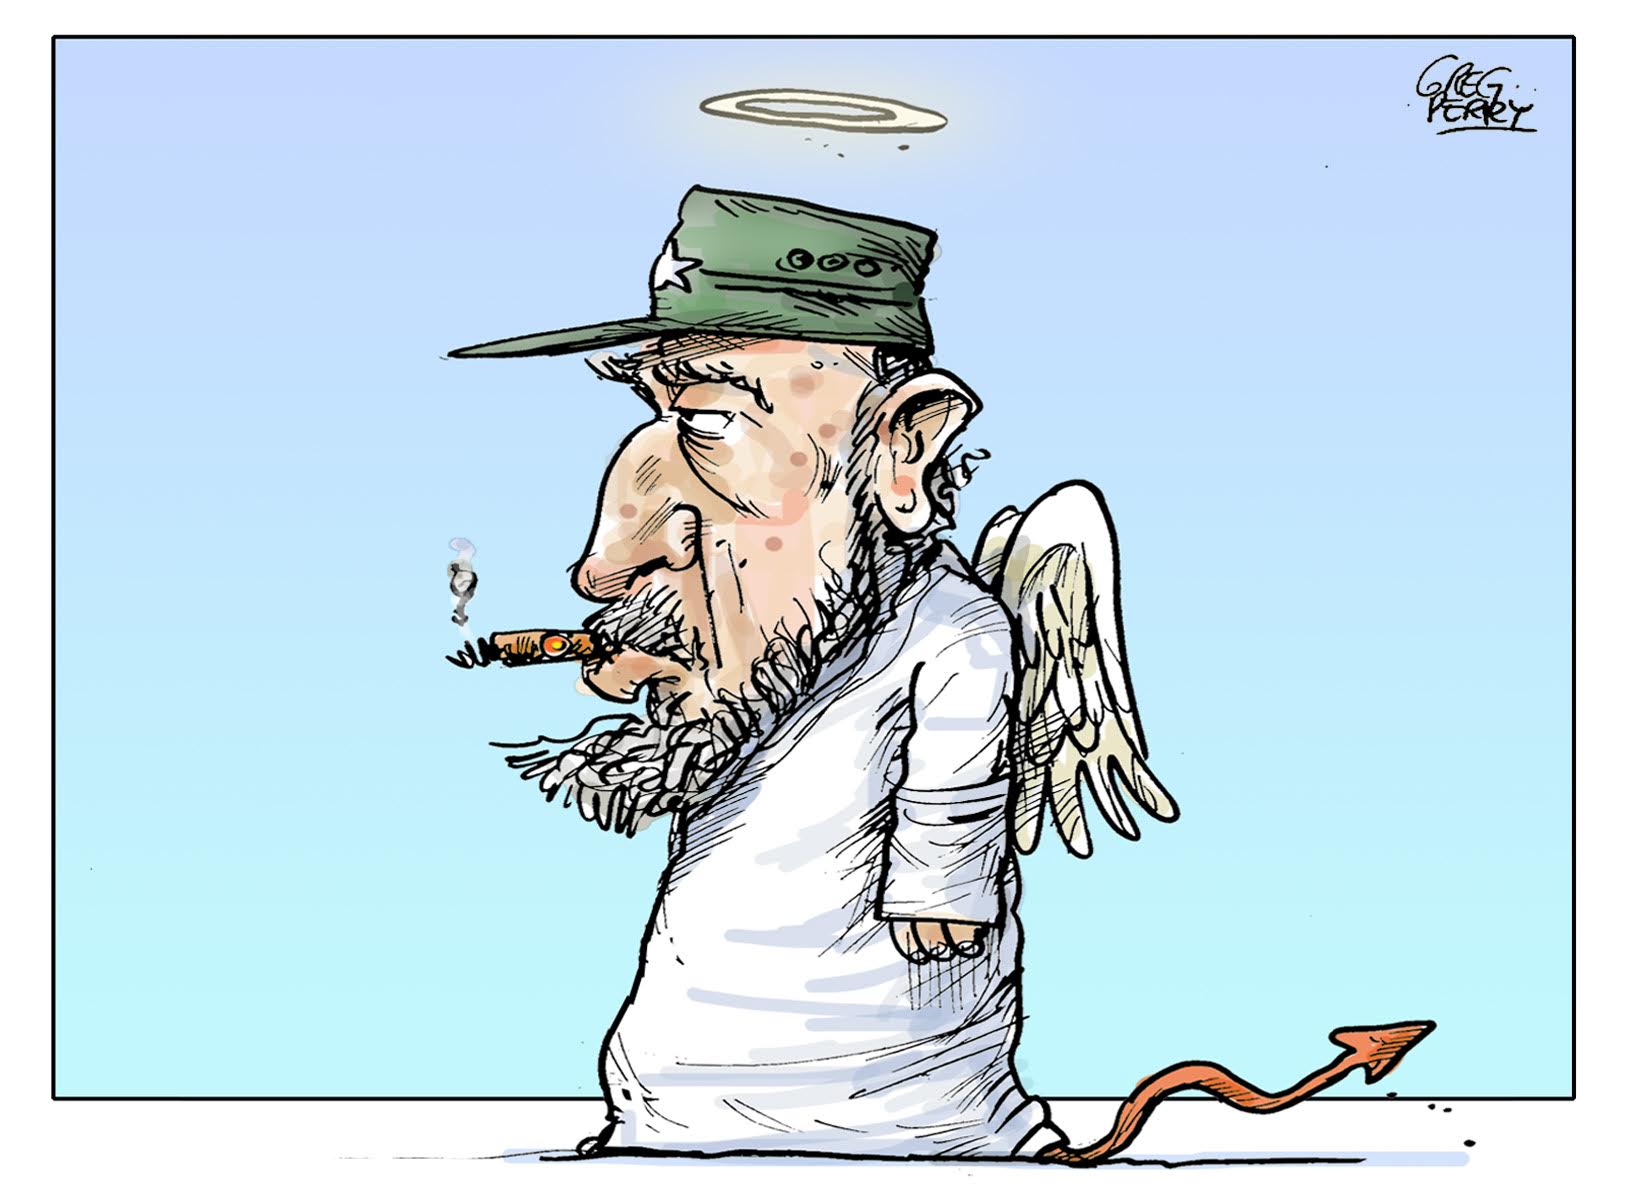 Castro cartoon by Greg Perry